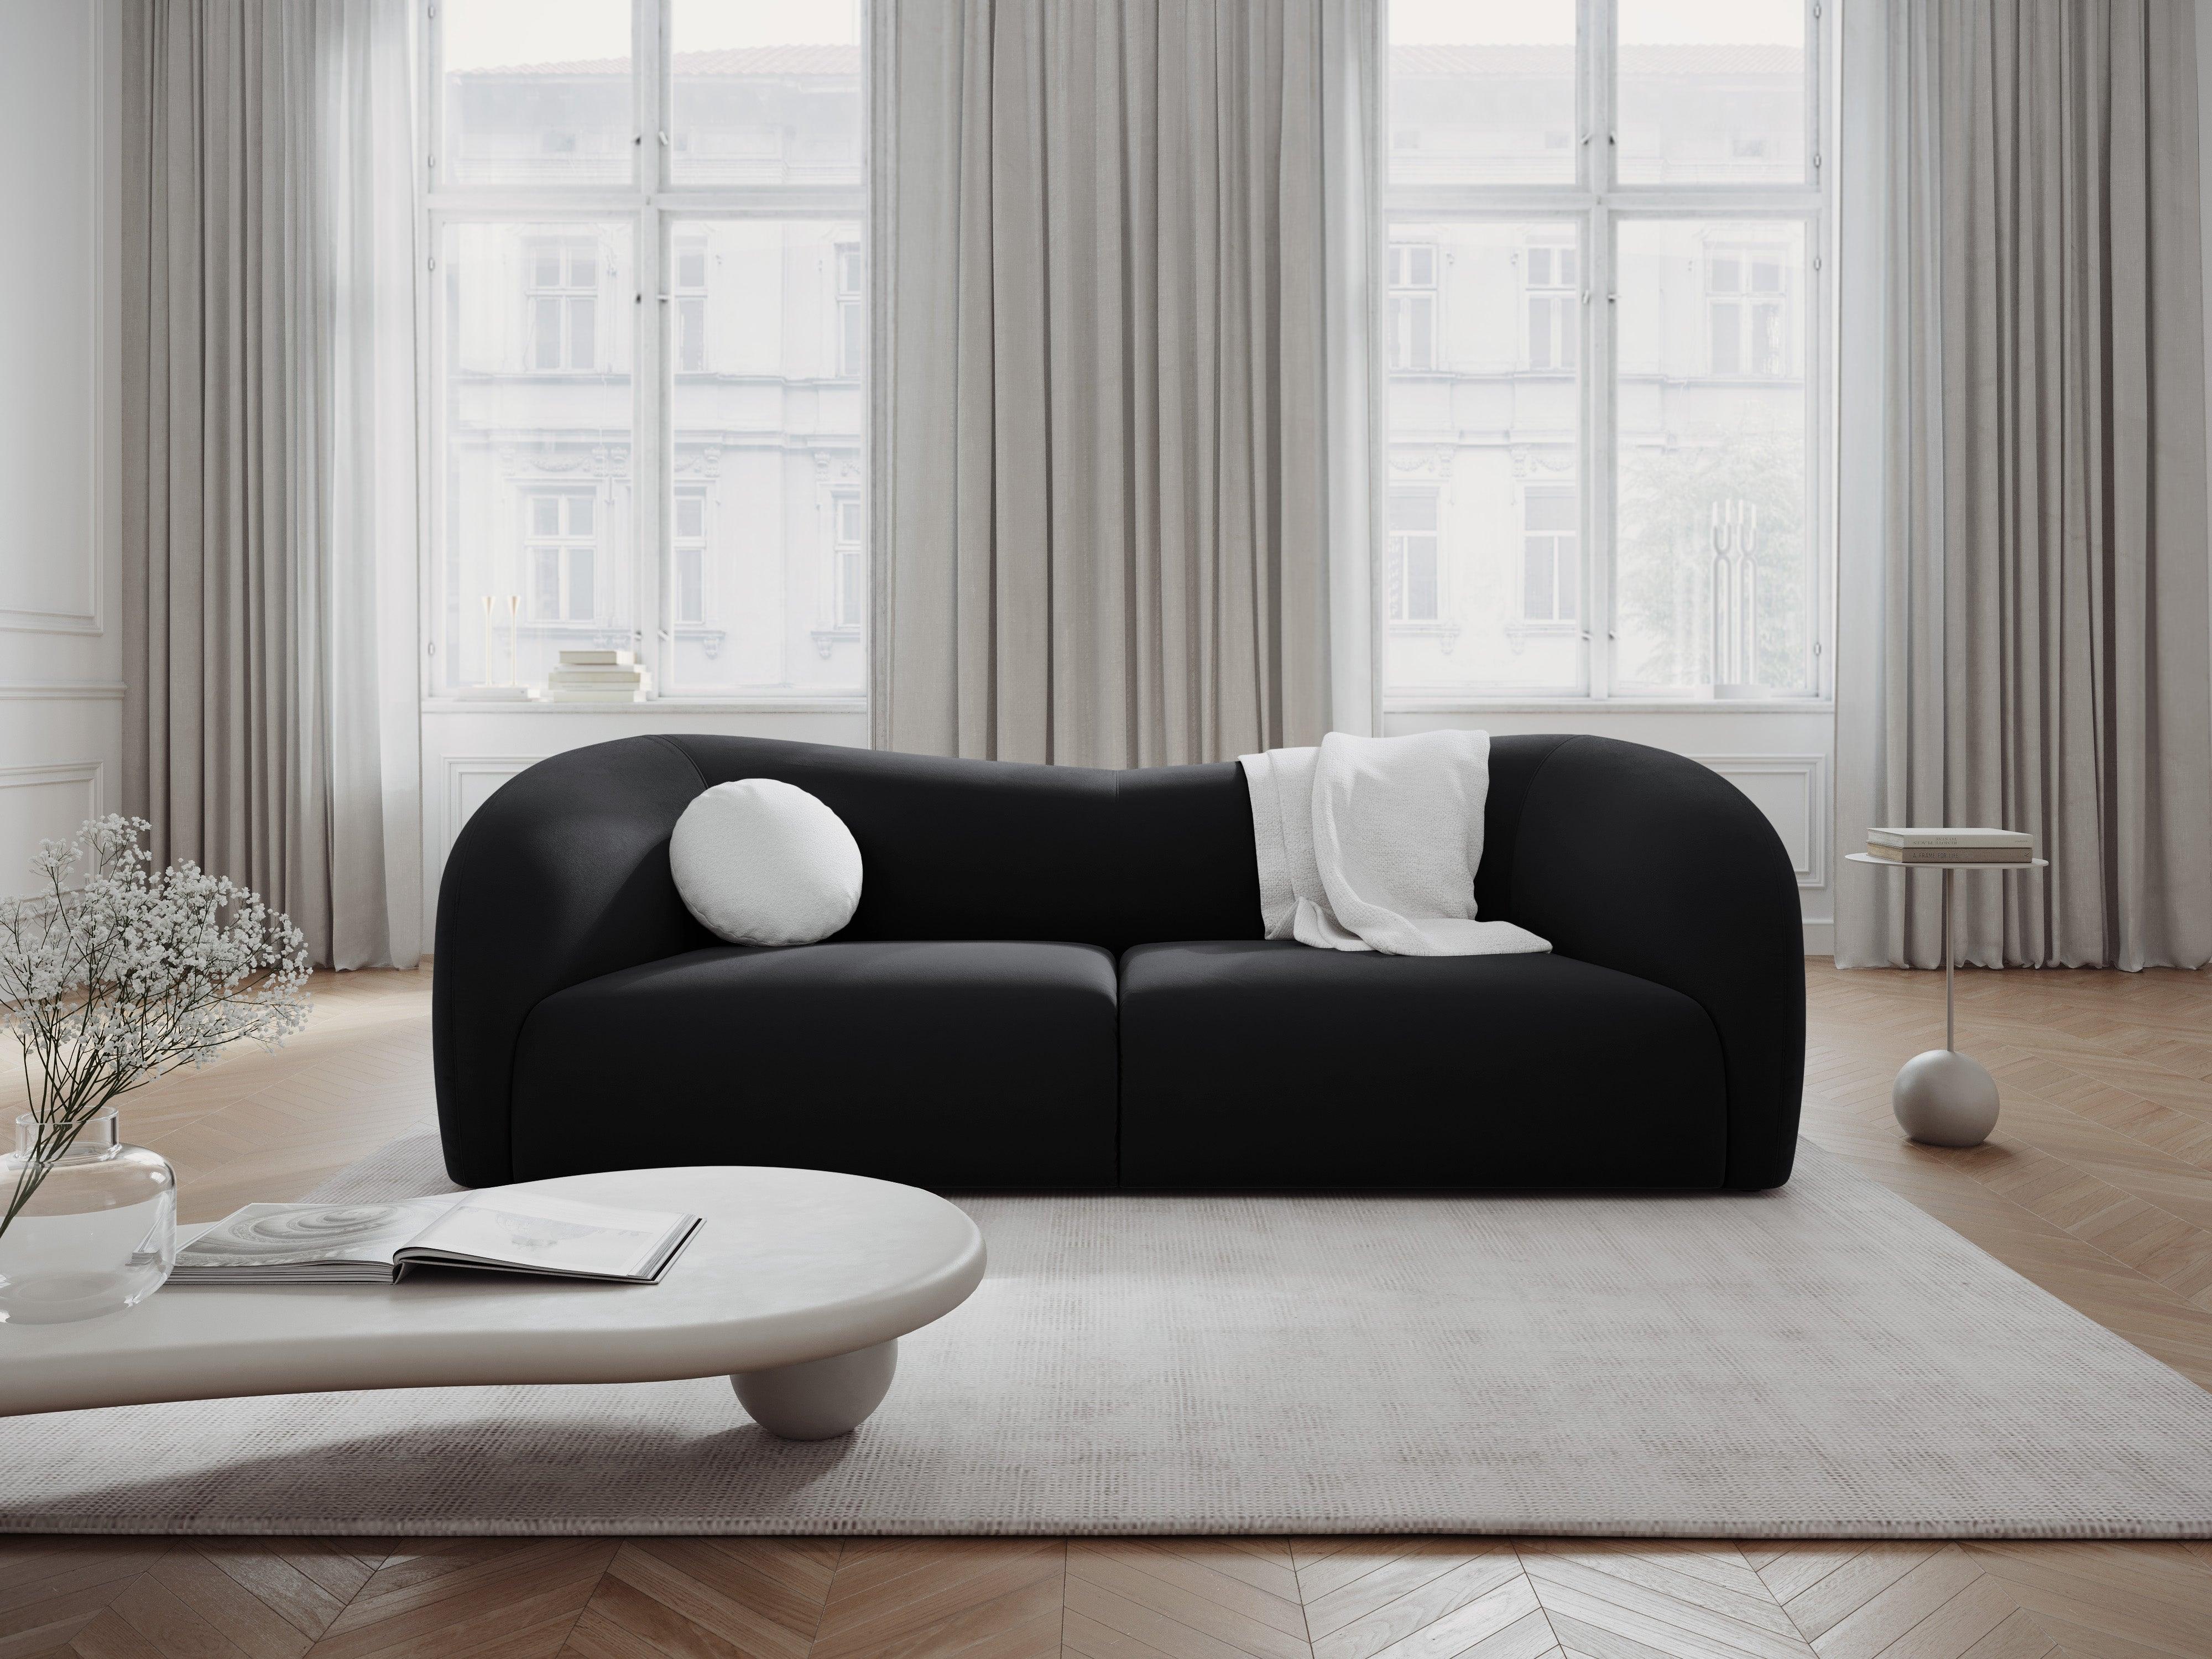 Velvet Sofa, "Santi", 3 Seats, Black, 237x90x75
Made in Europe Interieurs 86    Eye on Design